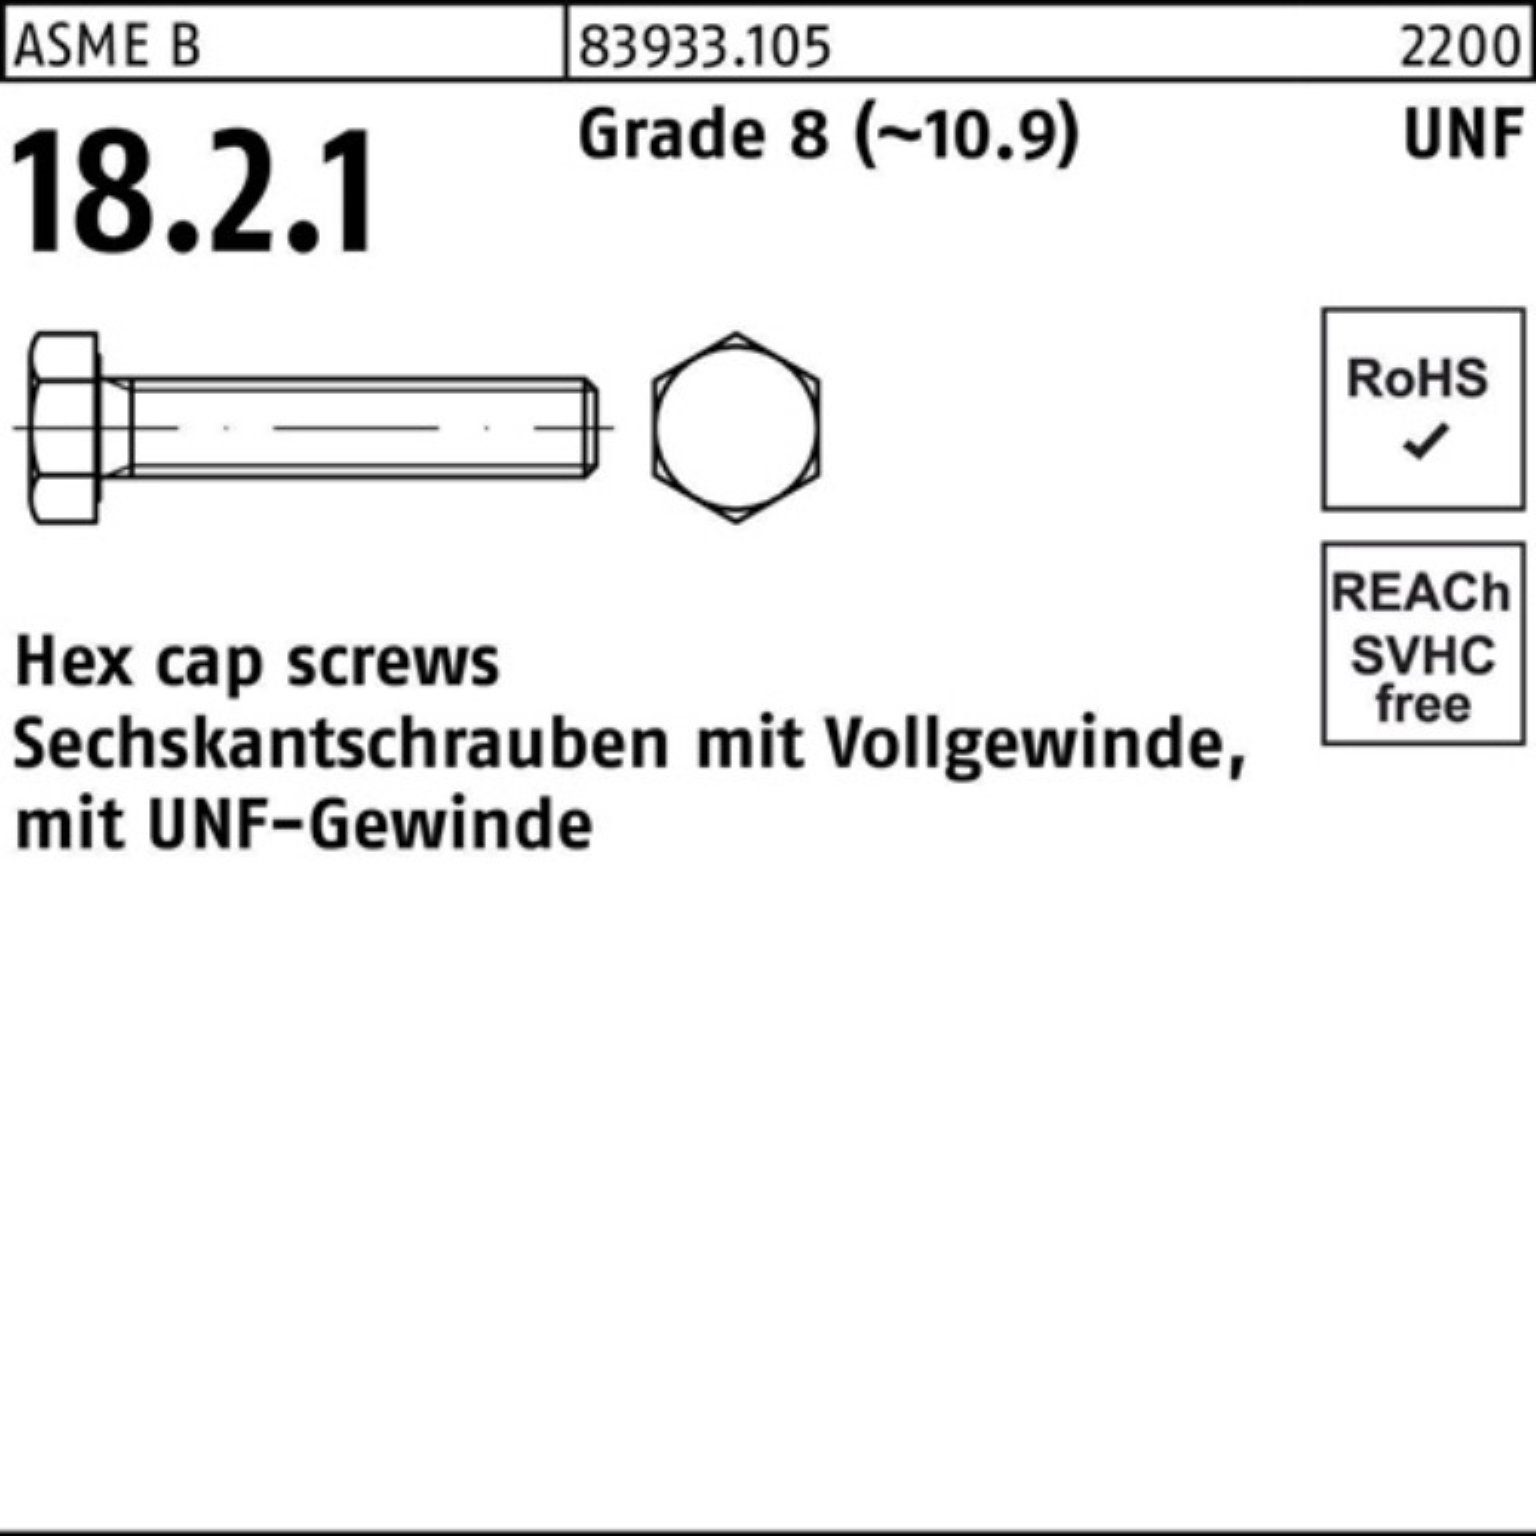 Reyher Sechskantschraube 100er Pack Sechskantschraube R 83933 UNF-Gewinde VG 1/4x 7/8 Grade 8